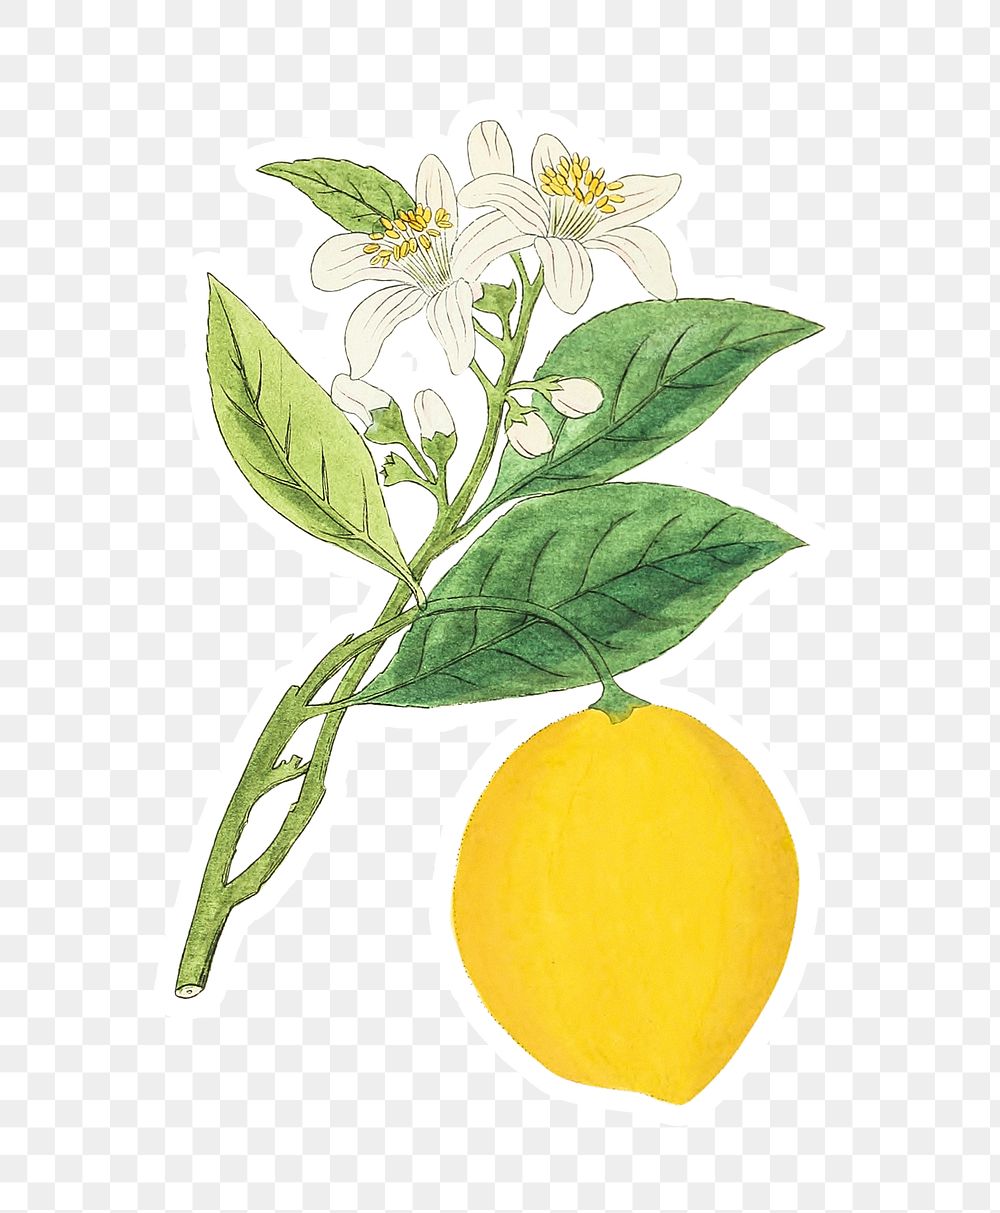 Vintage lemon on a branch sticker with a white border design element